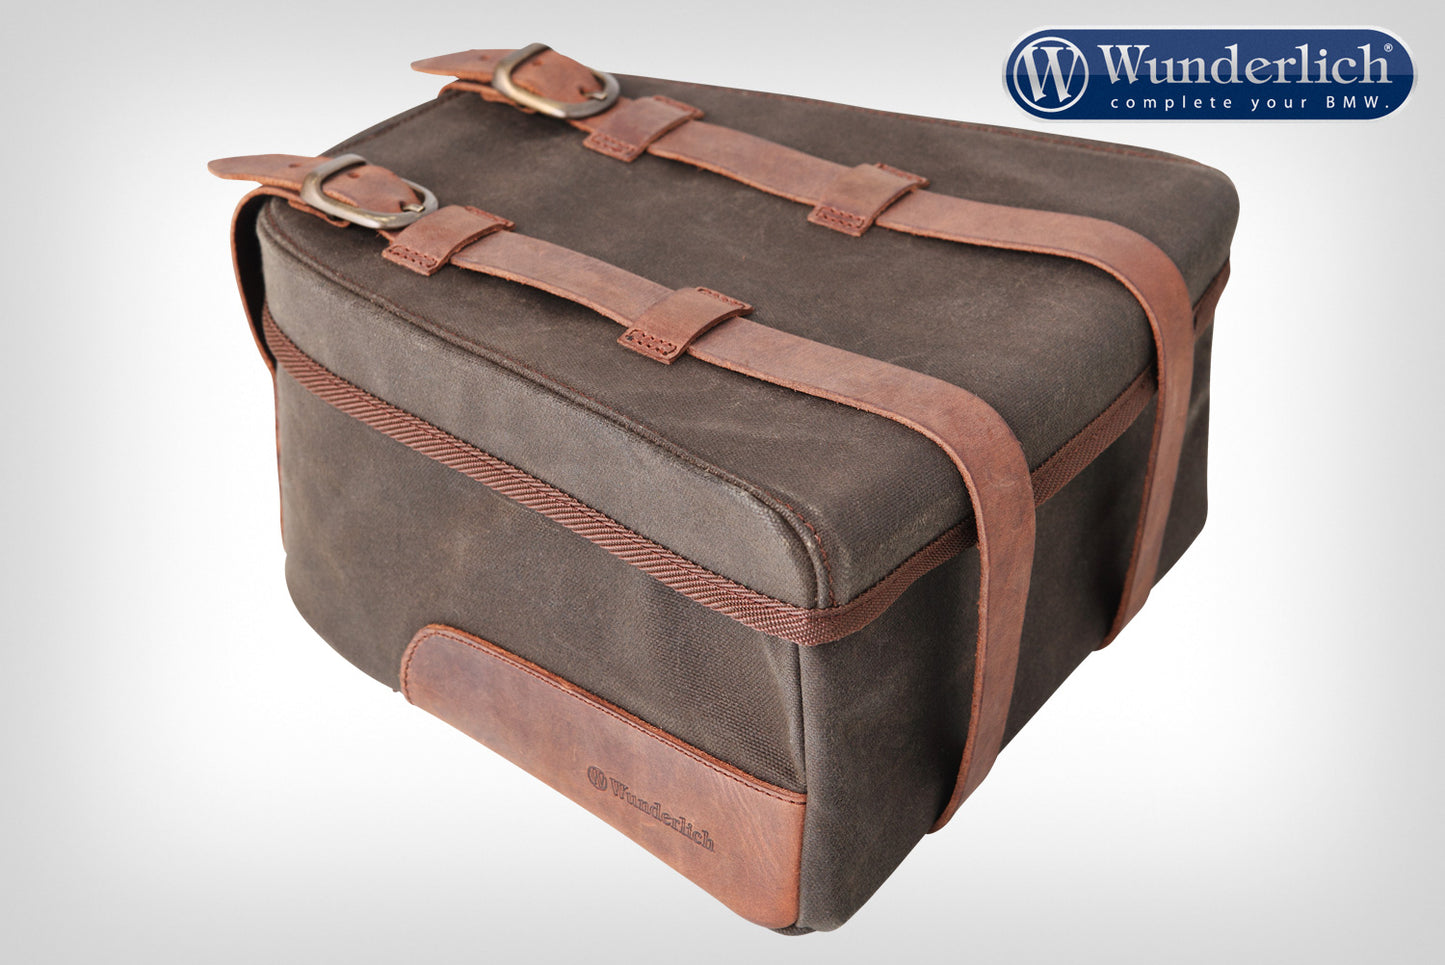 Wunderlich &#8220;Mammut&#8221; saddle bag for passenger luggage carrier - khaki